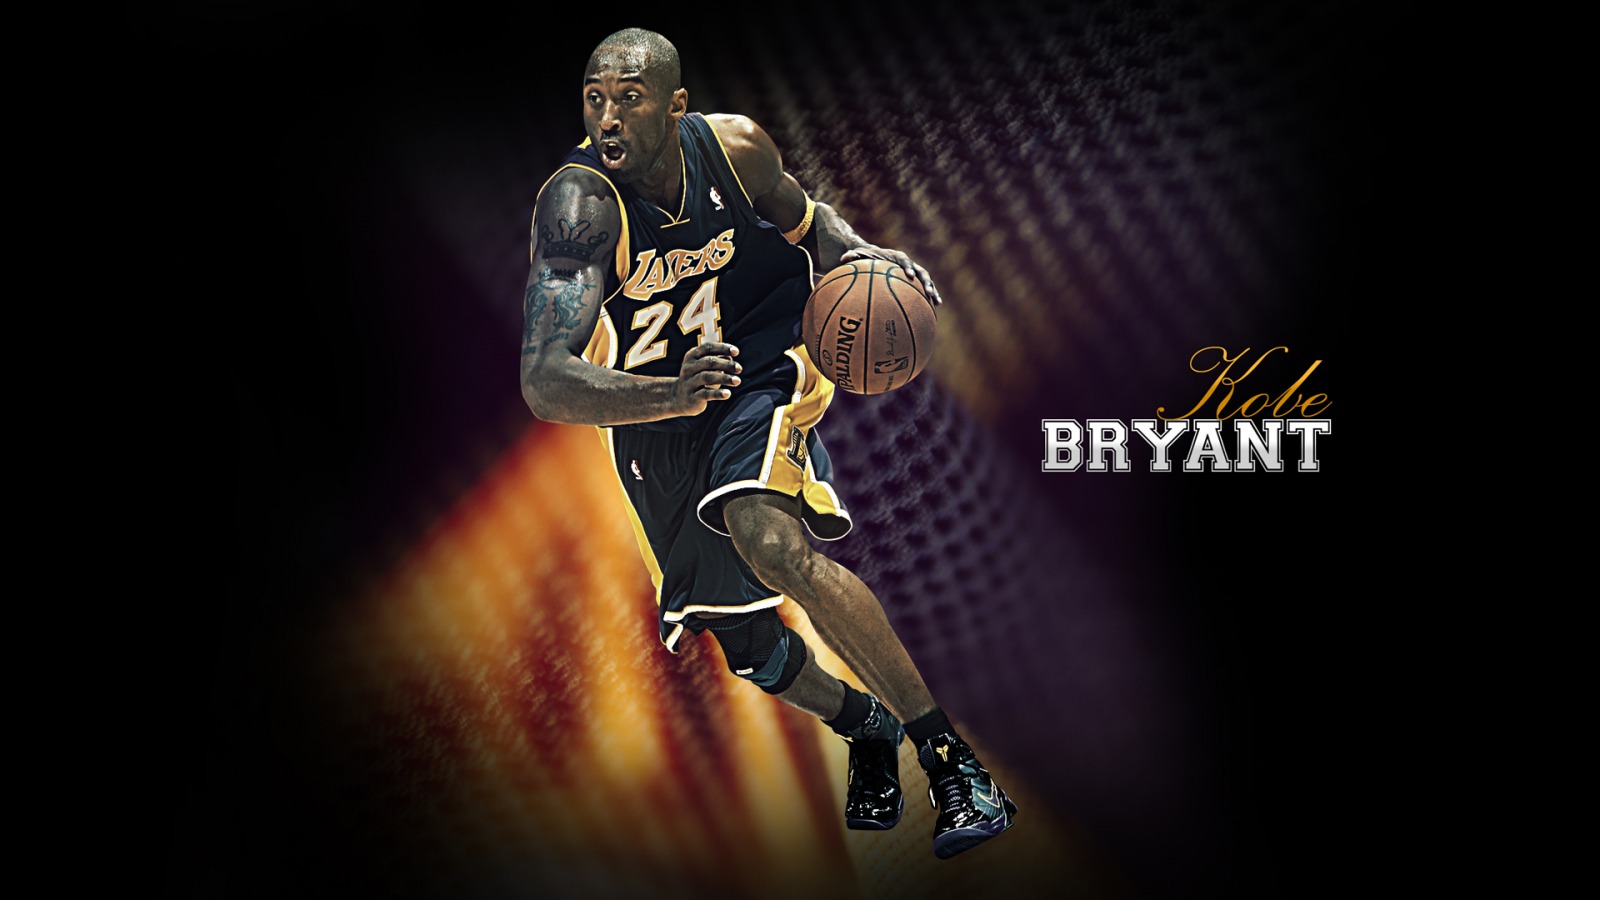 Kobe Bryant Wallpaper Nba Sports In Jpg Format